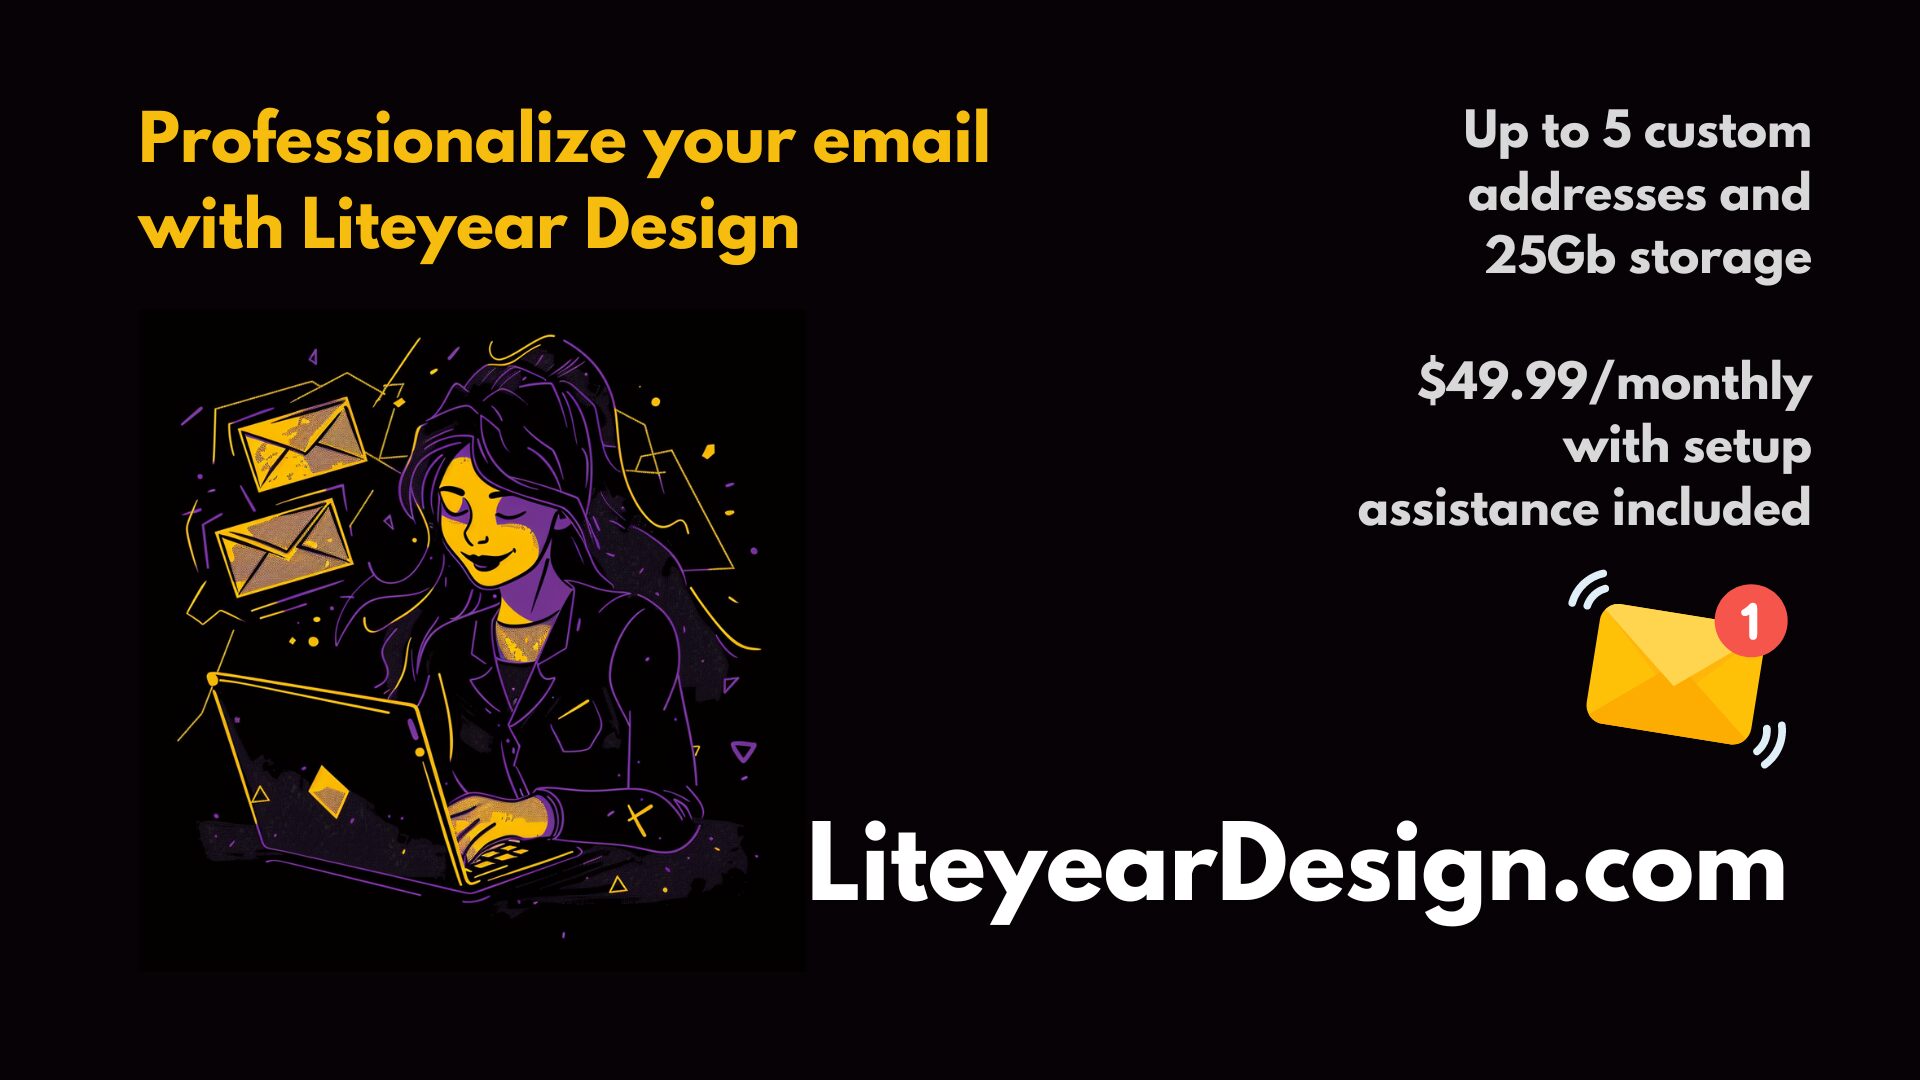 Custom Email Service from Liteyear Design!